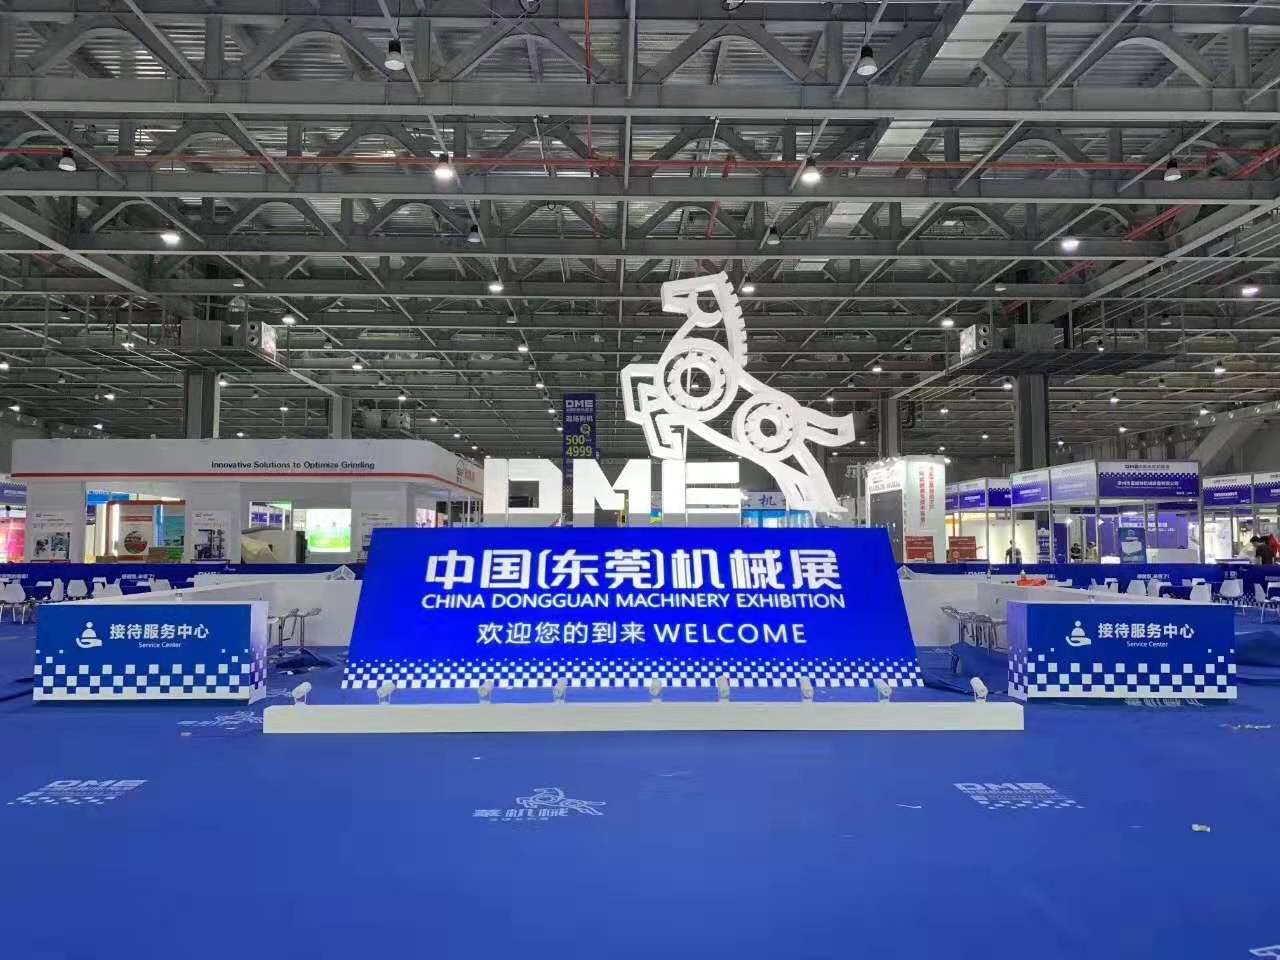 China Dongguan Machinery Exhibition